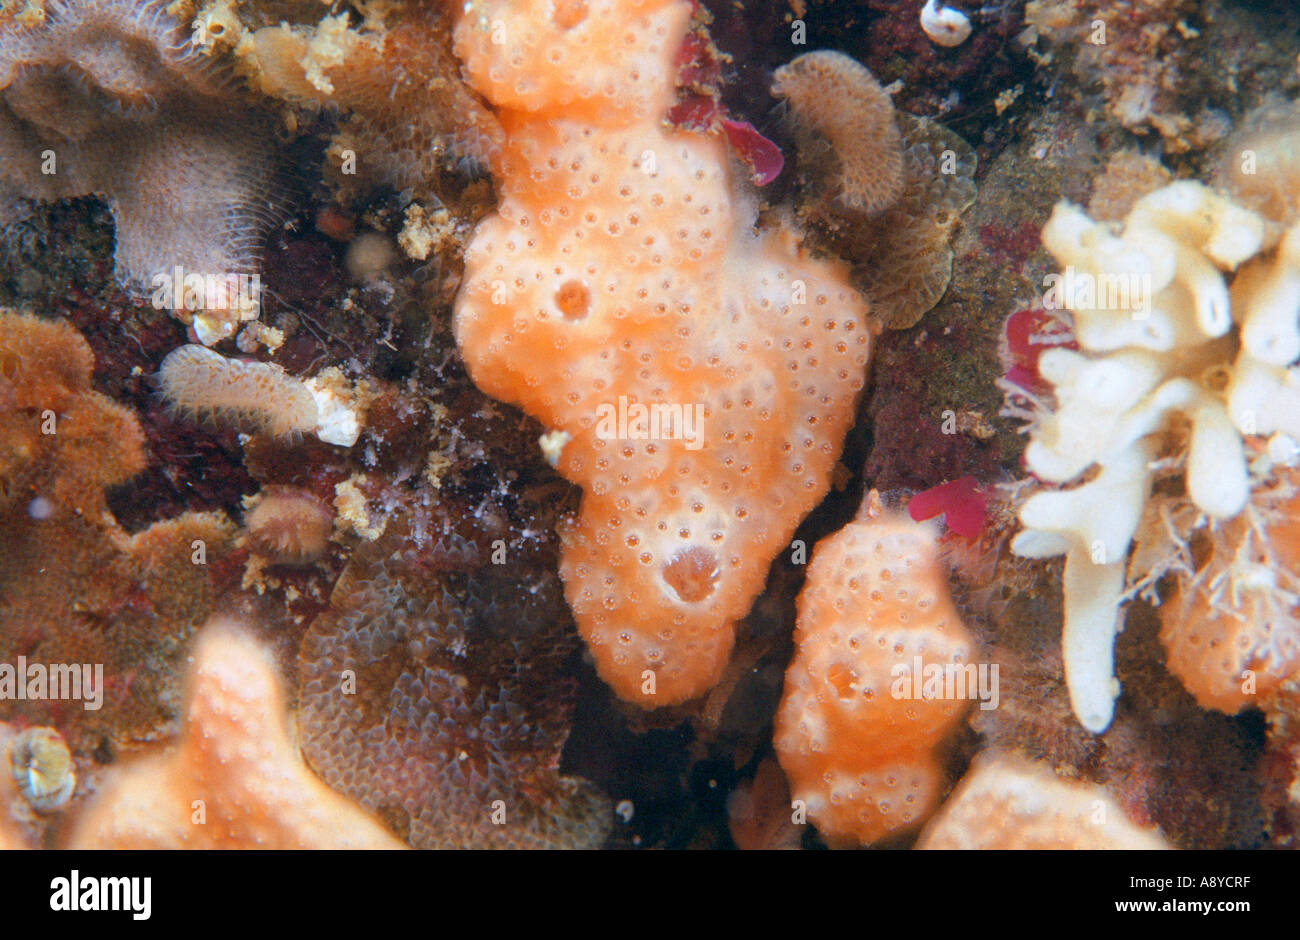 Marine invertebrates encrusting stone orange colonial ascidian Didemnum, white calcareos sponge flat colonies Bryozoa. N Pacific Stock Photo